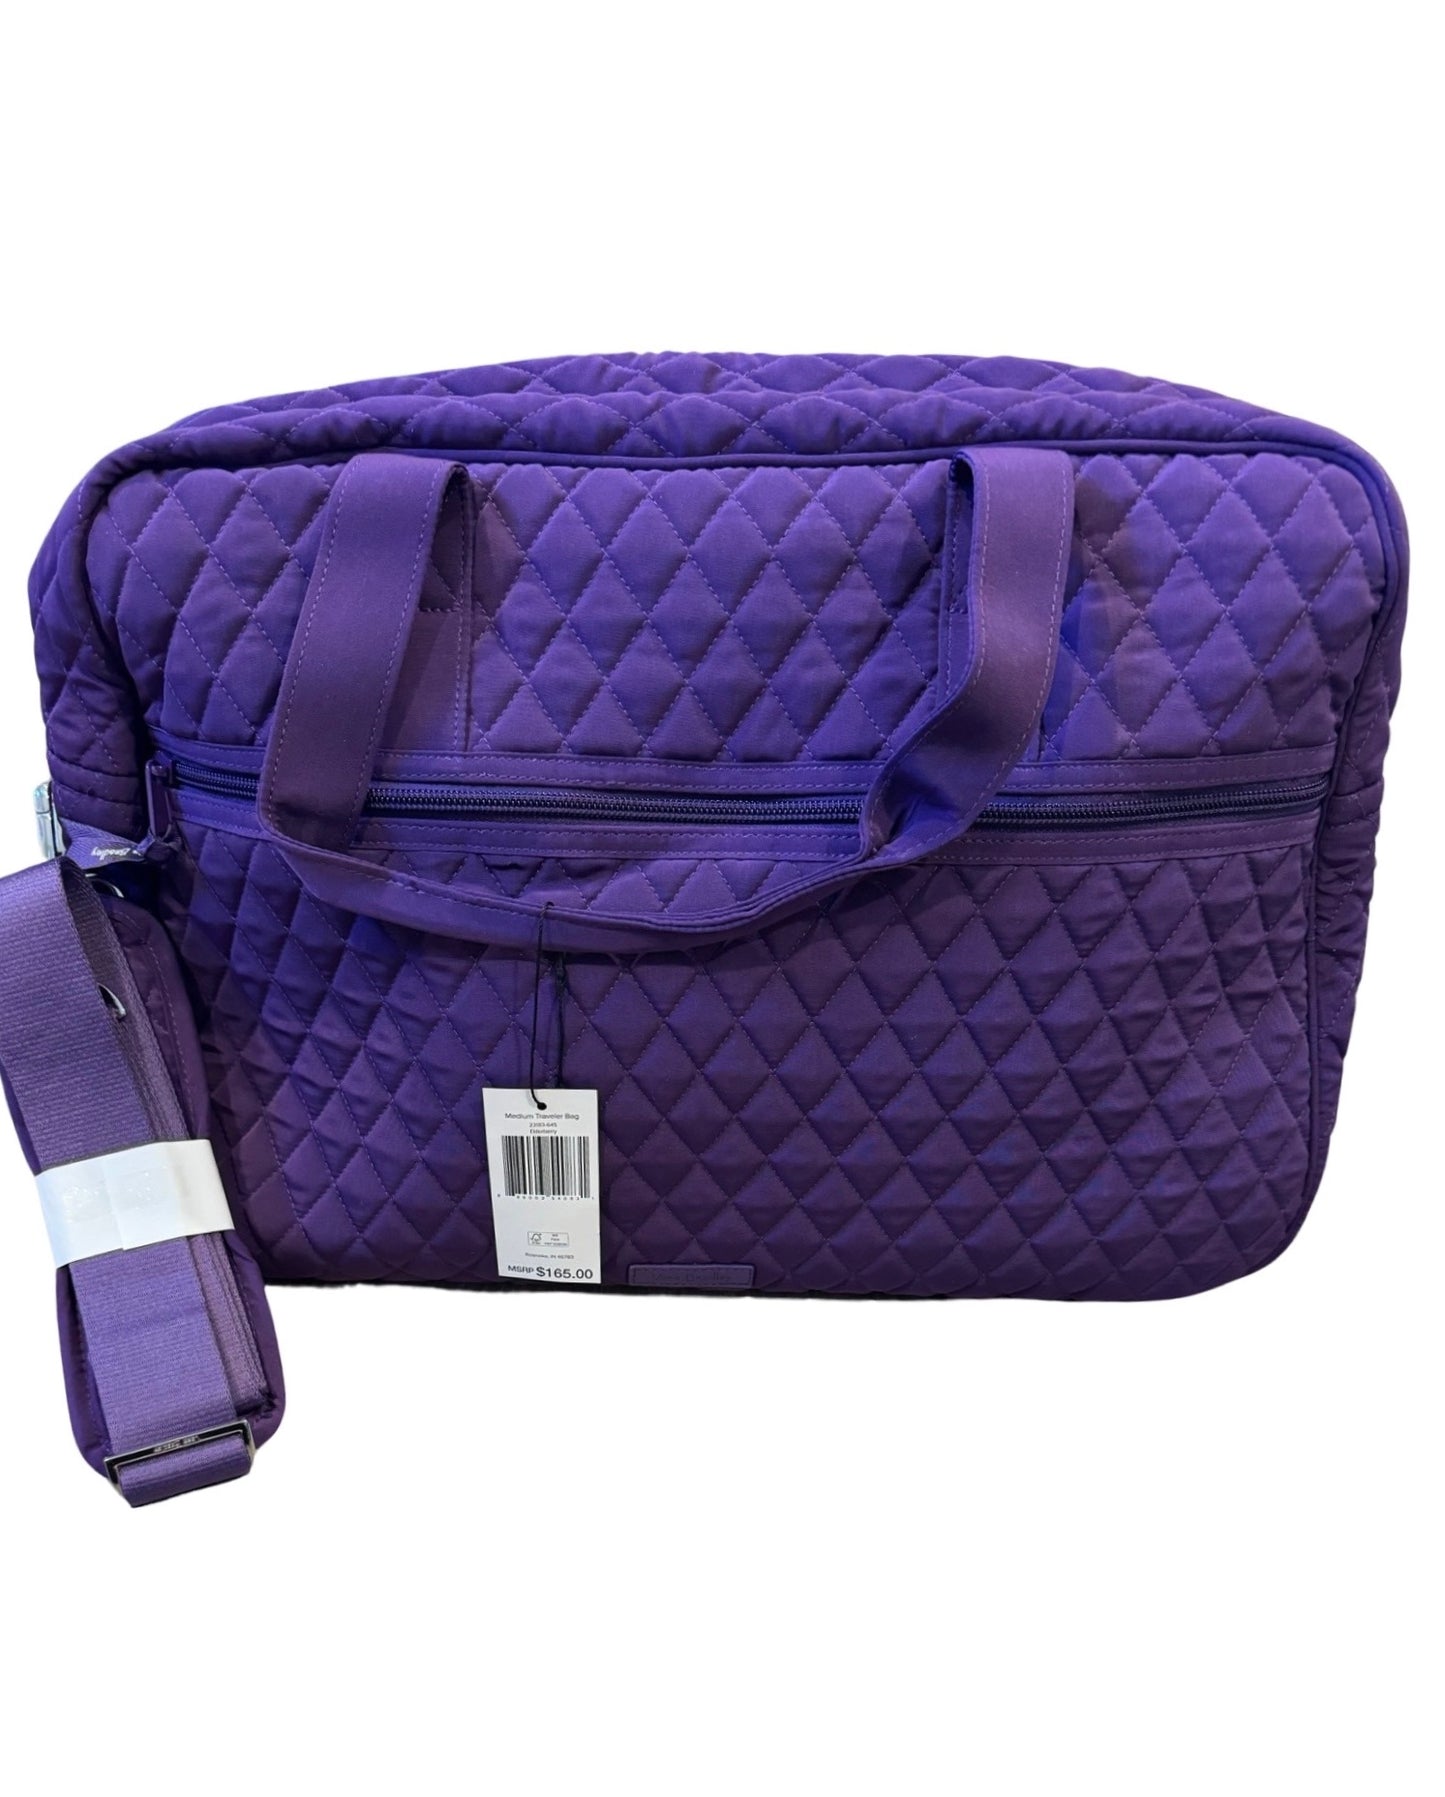 *Reduced* Vera Bradley NWT Purple Weekend Travel Bag